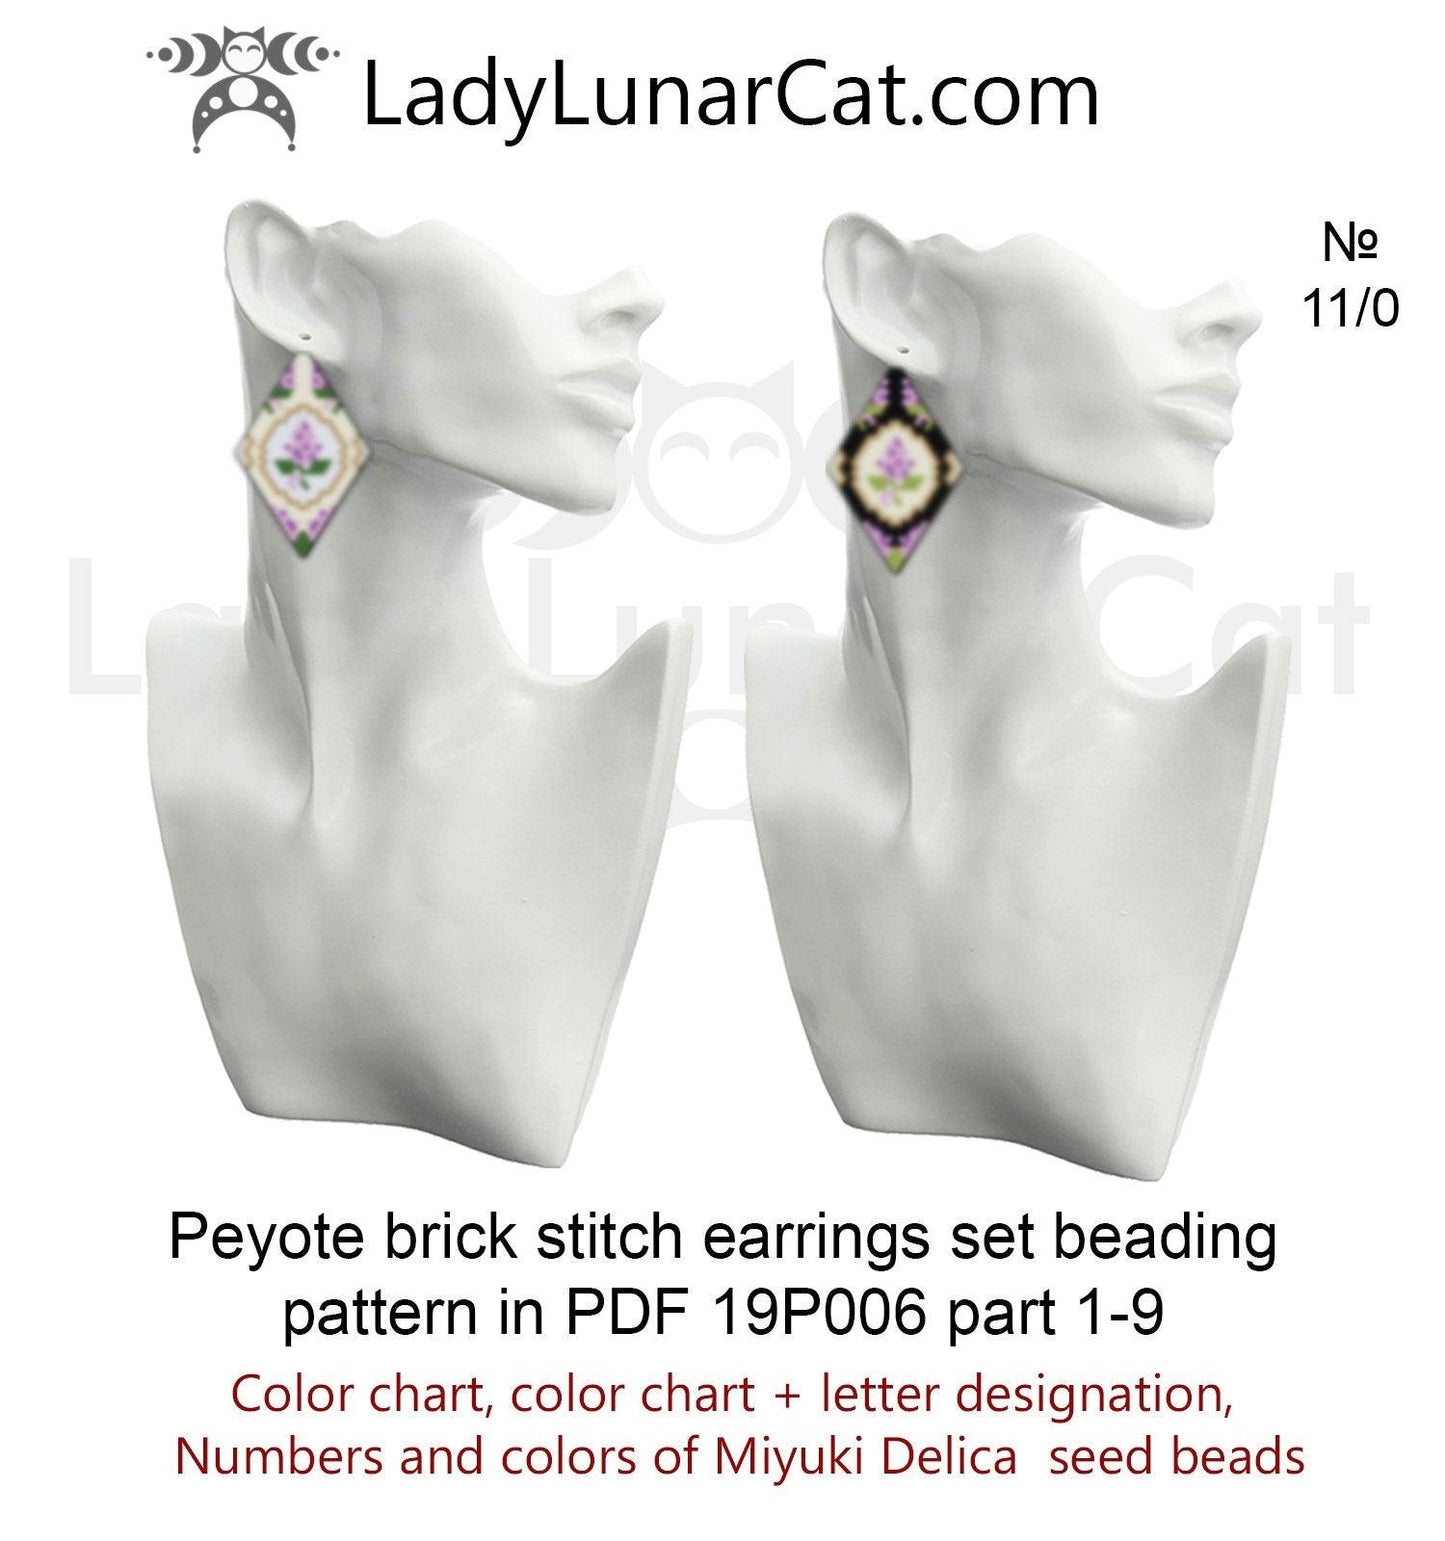 Lilac vintage flowers brick stitch beading earrings set pattern19P006 LadyLunarCat